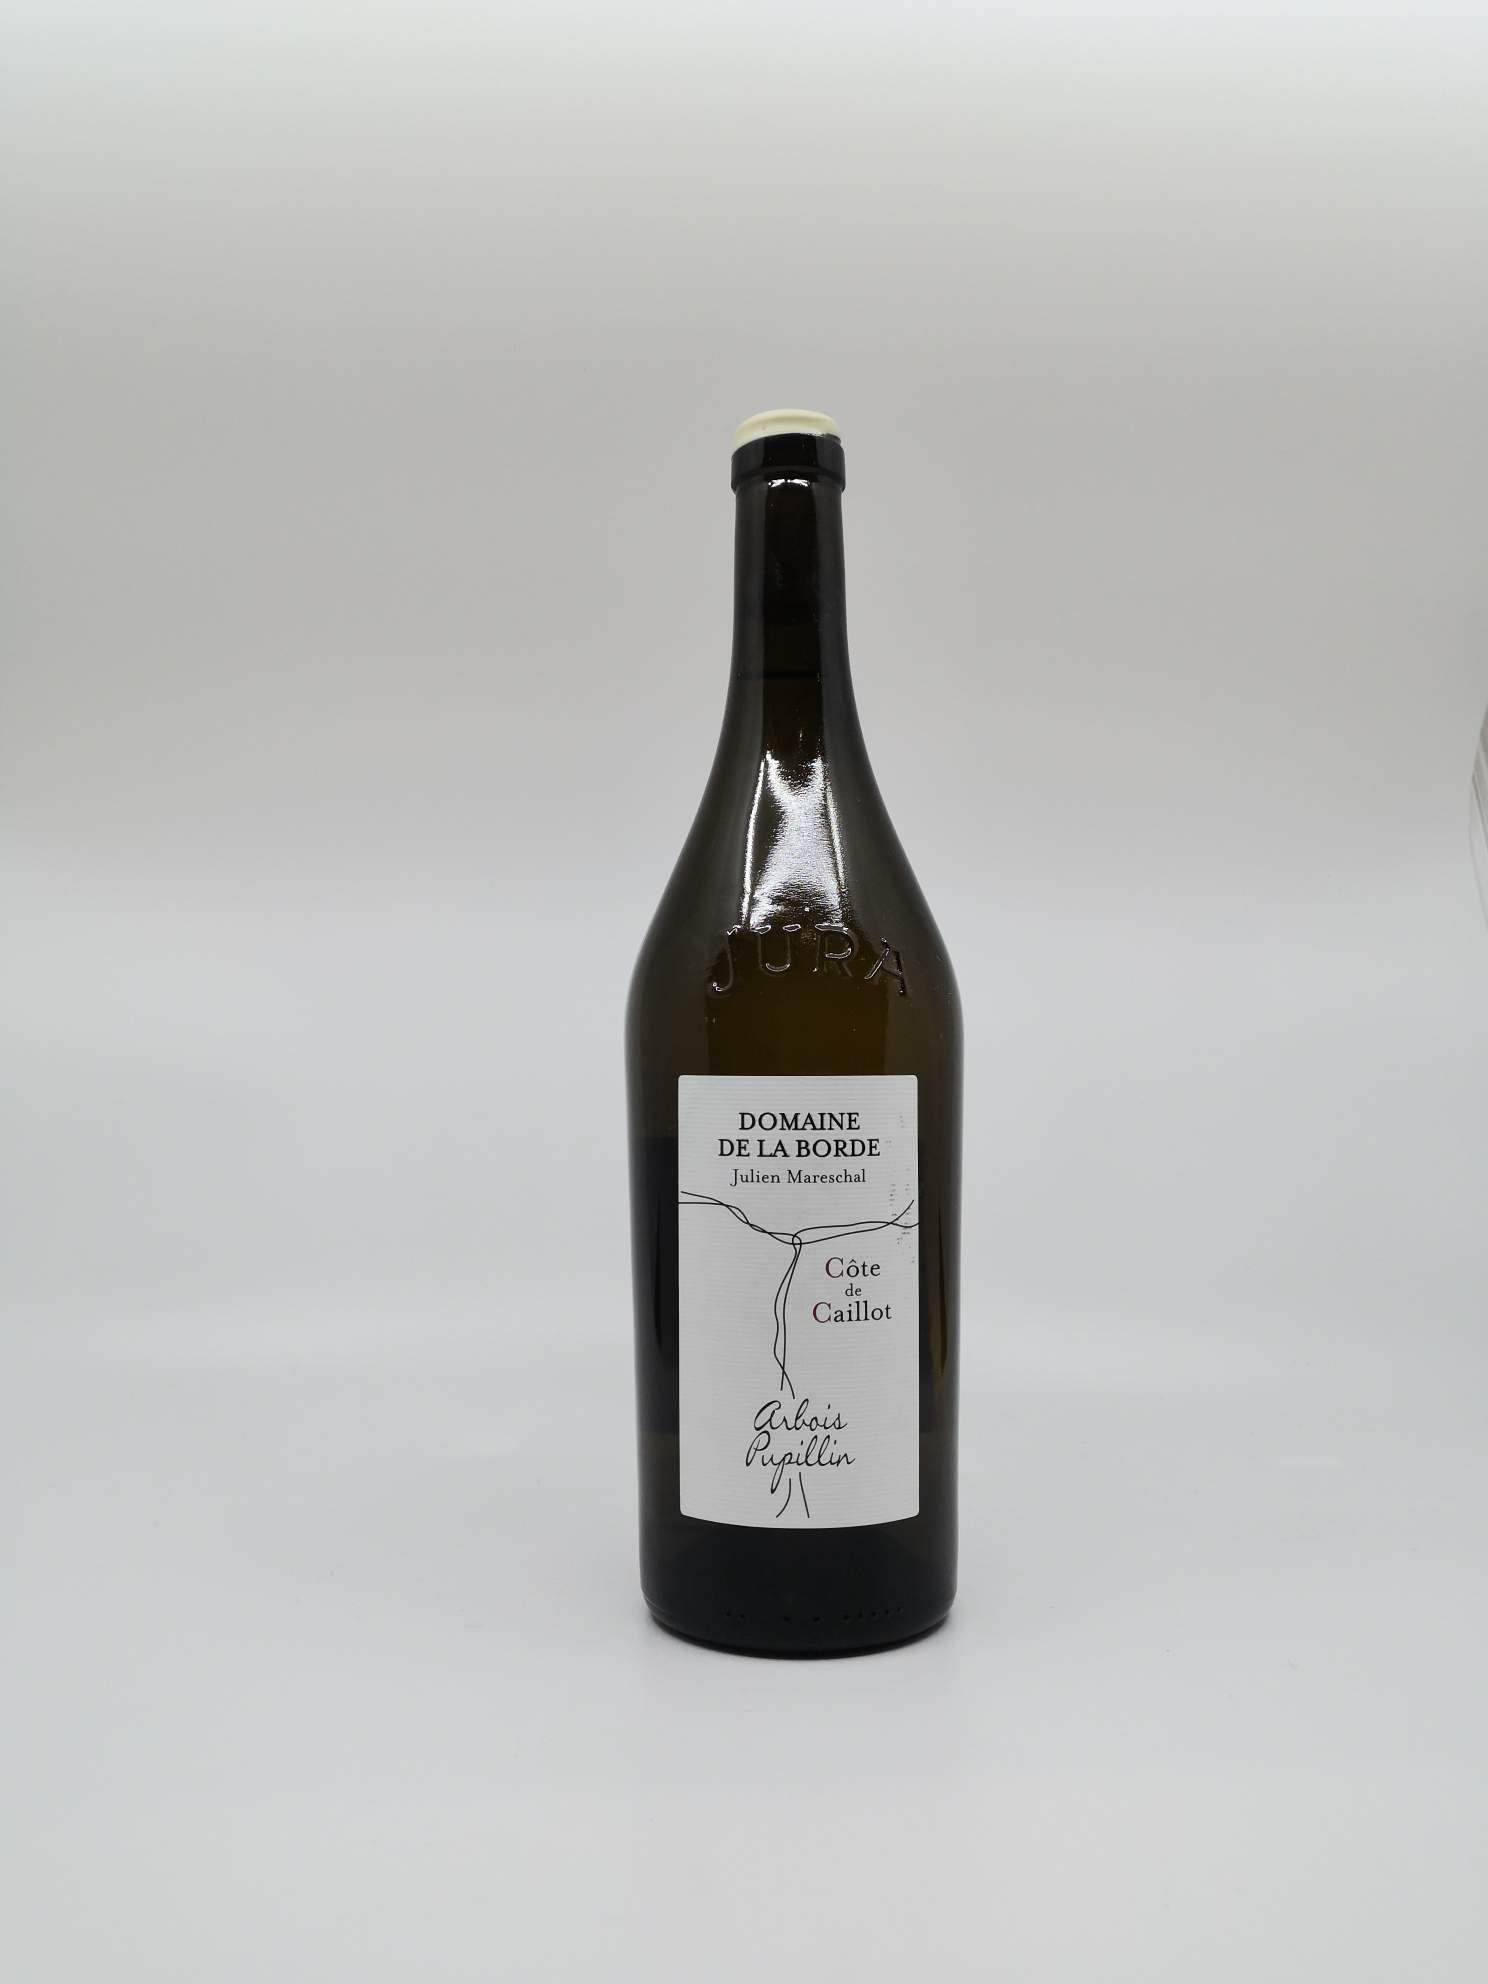 ARBOIS Chardonnay Cote de Caillot LA BORDE 2018